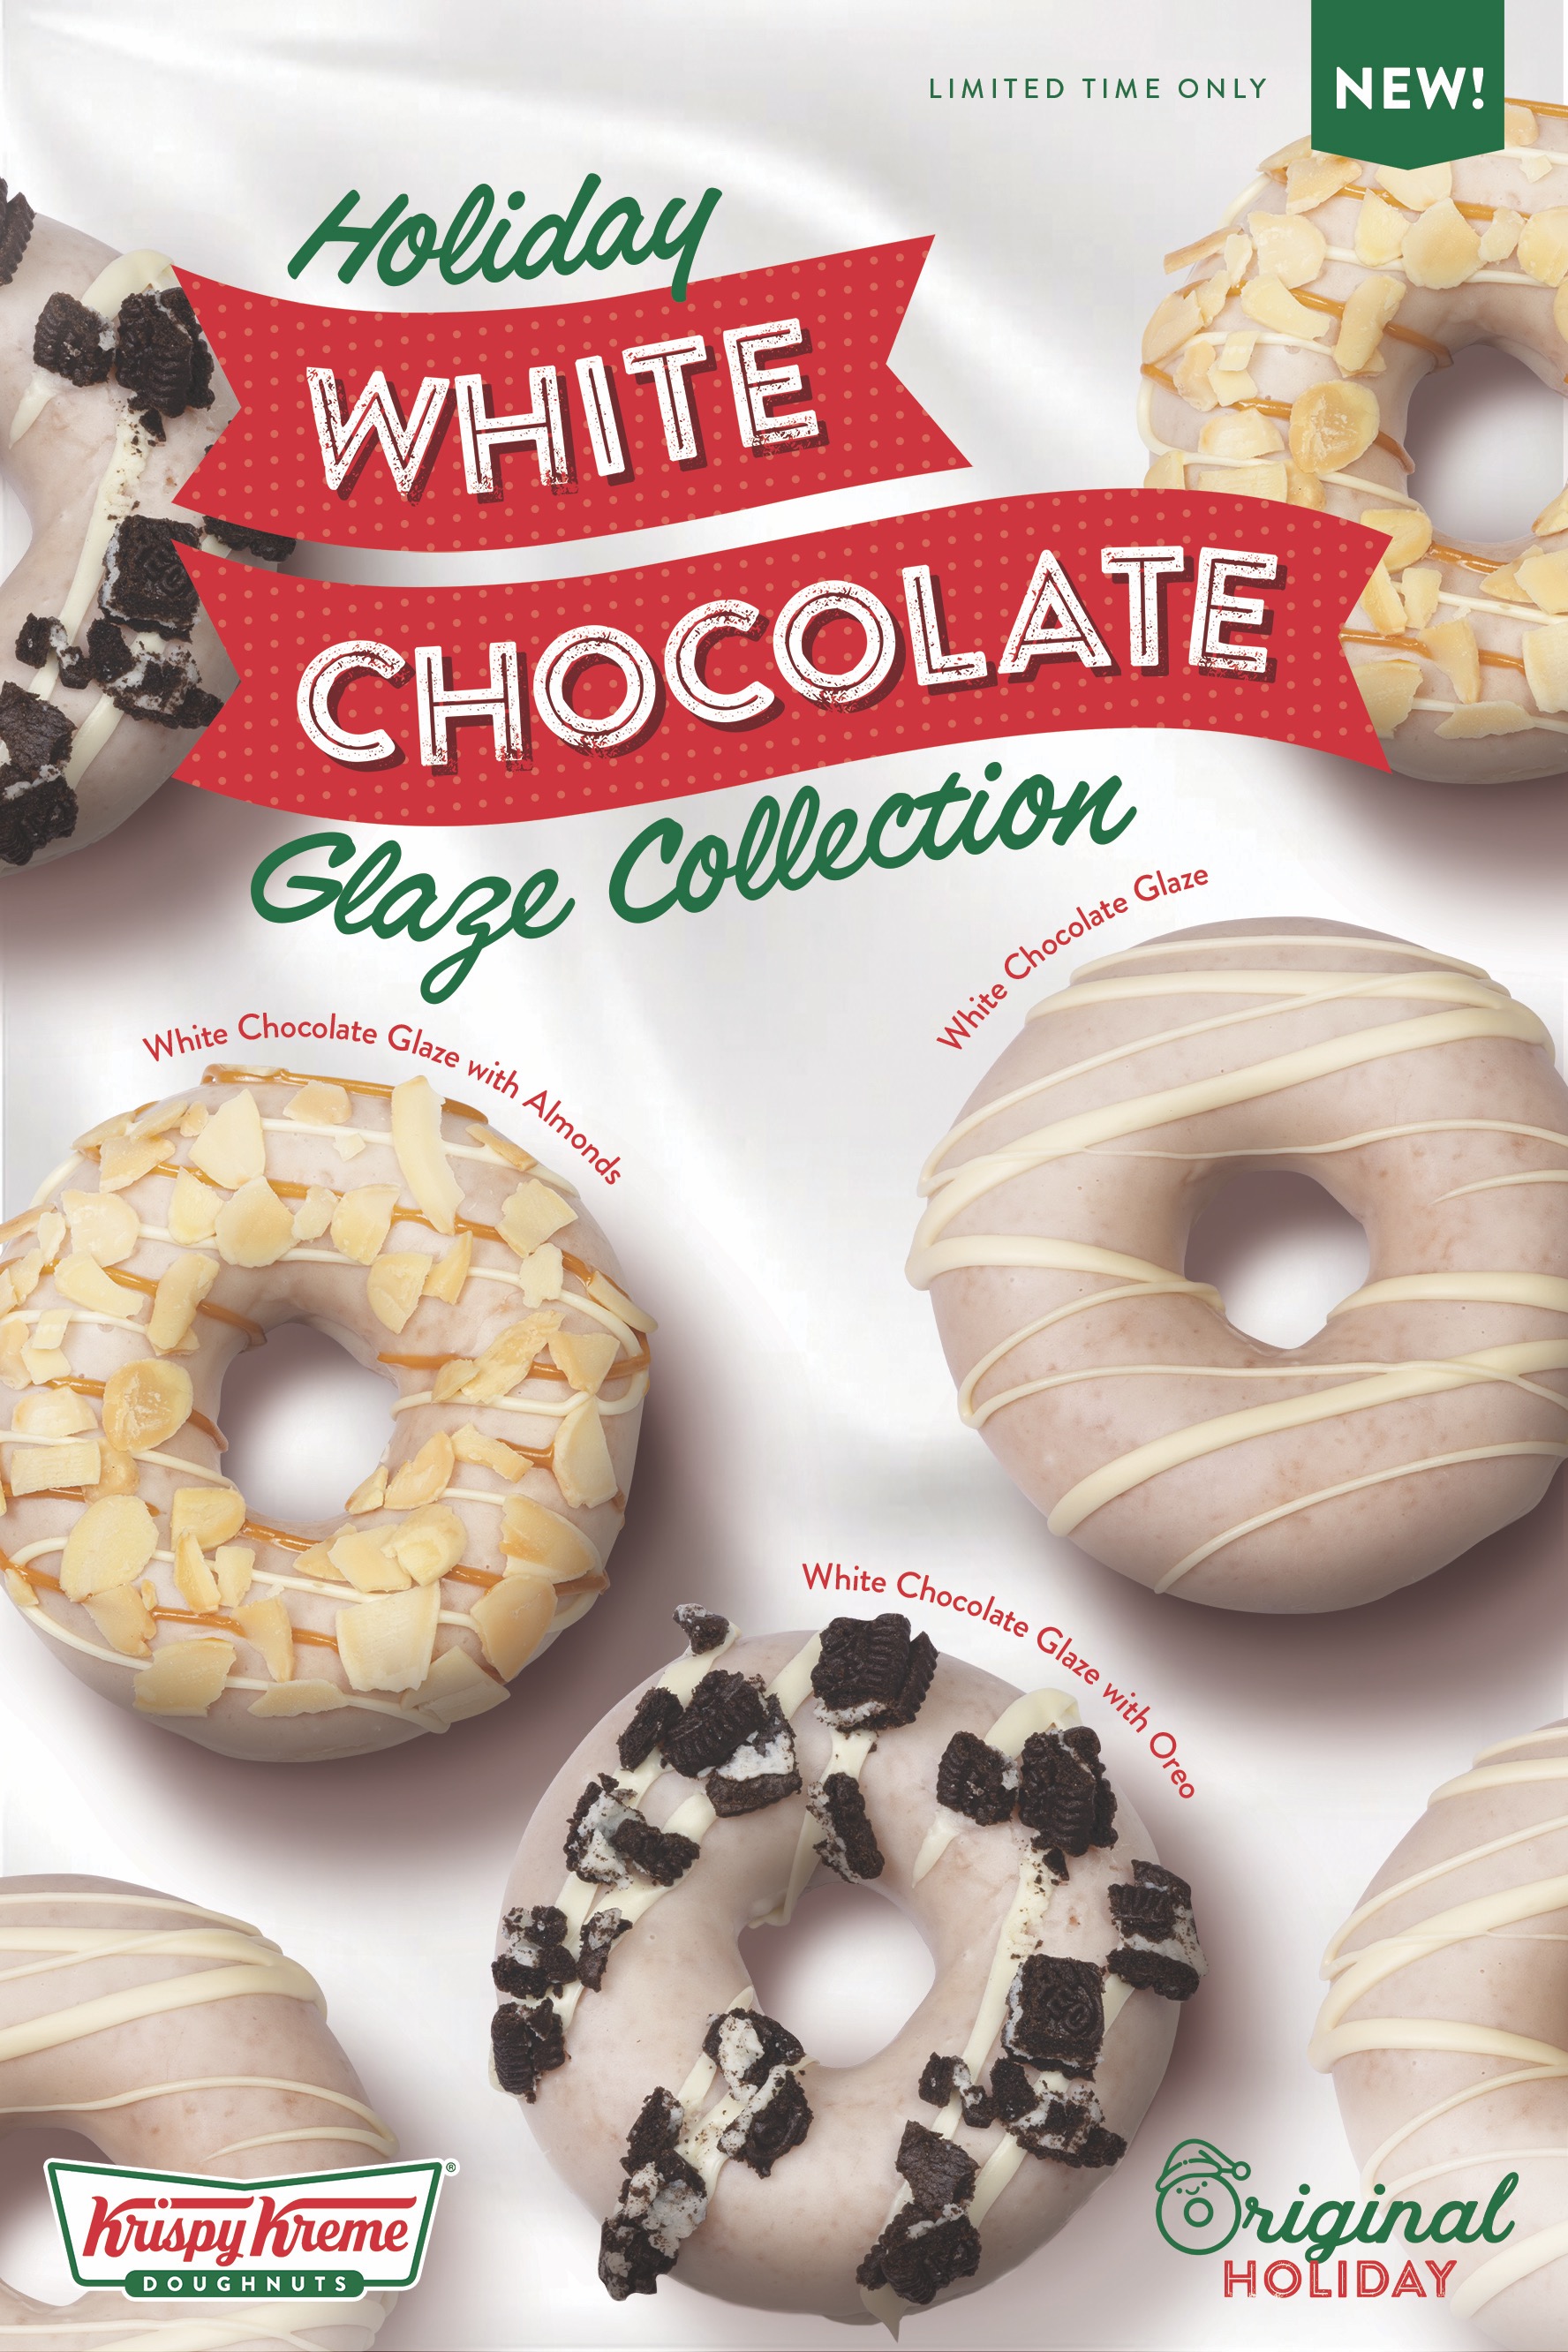 Krispy Kreme Launches Holiday White Chocolate Glaze Collection